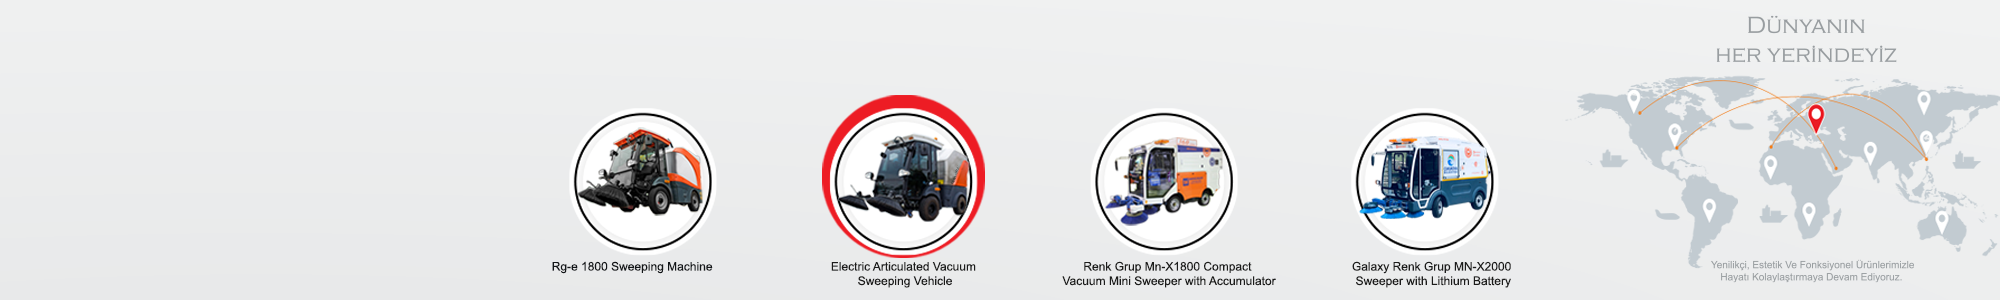 Renk Grup RG-1600 Electric Articulated Vacuum Sweeper Vehicle